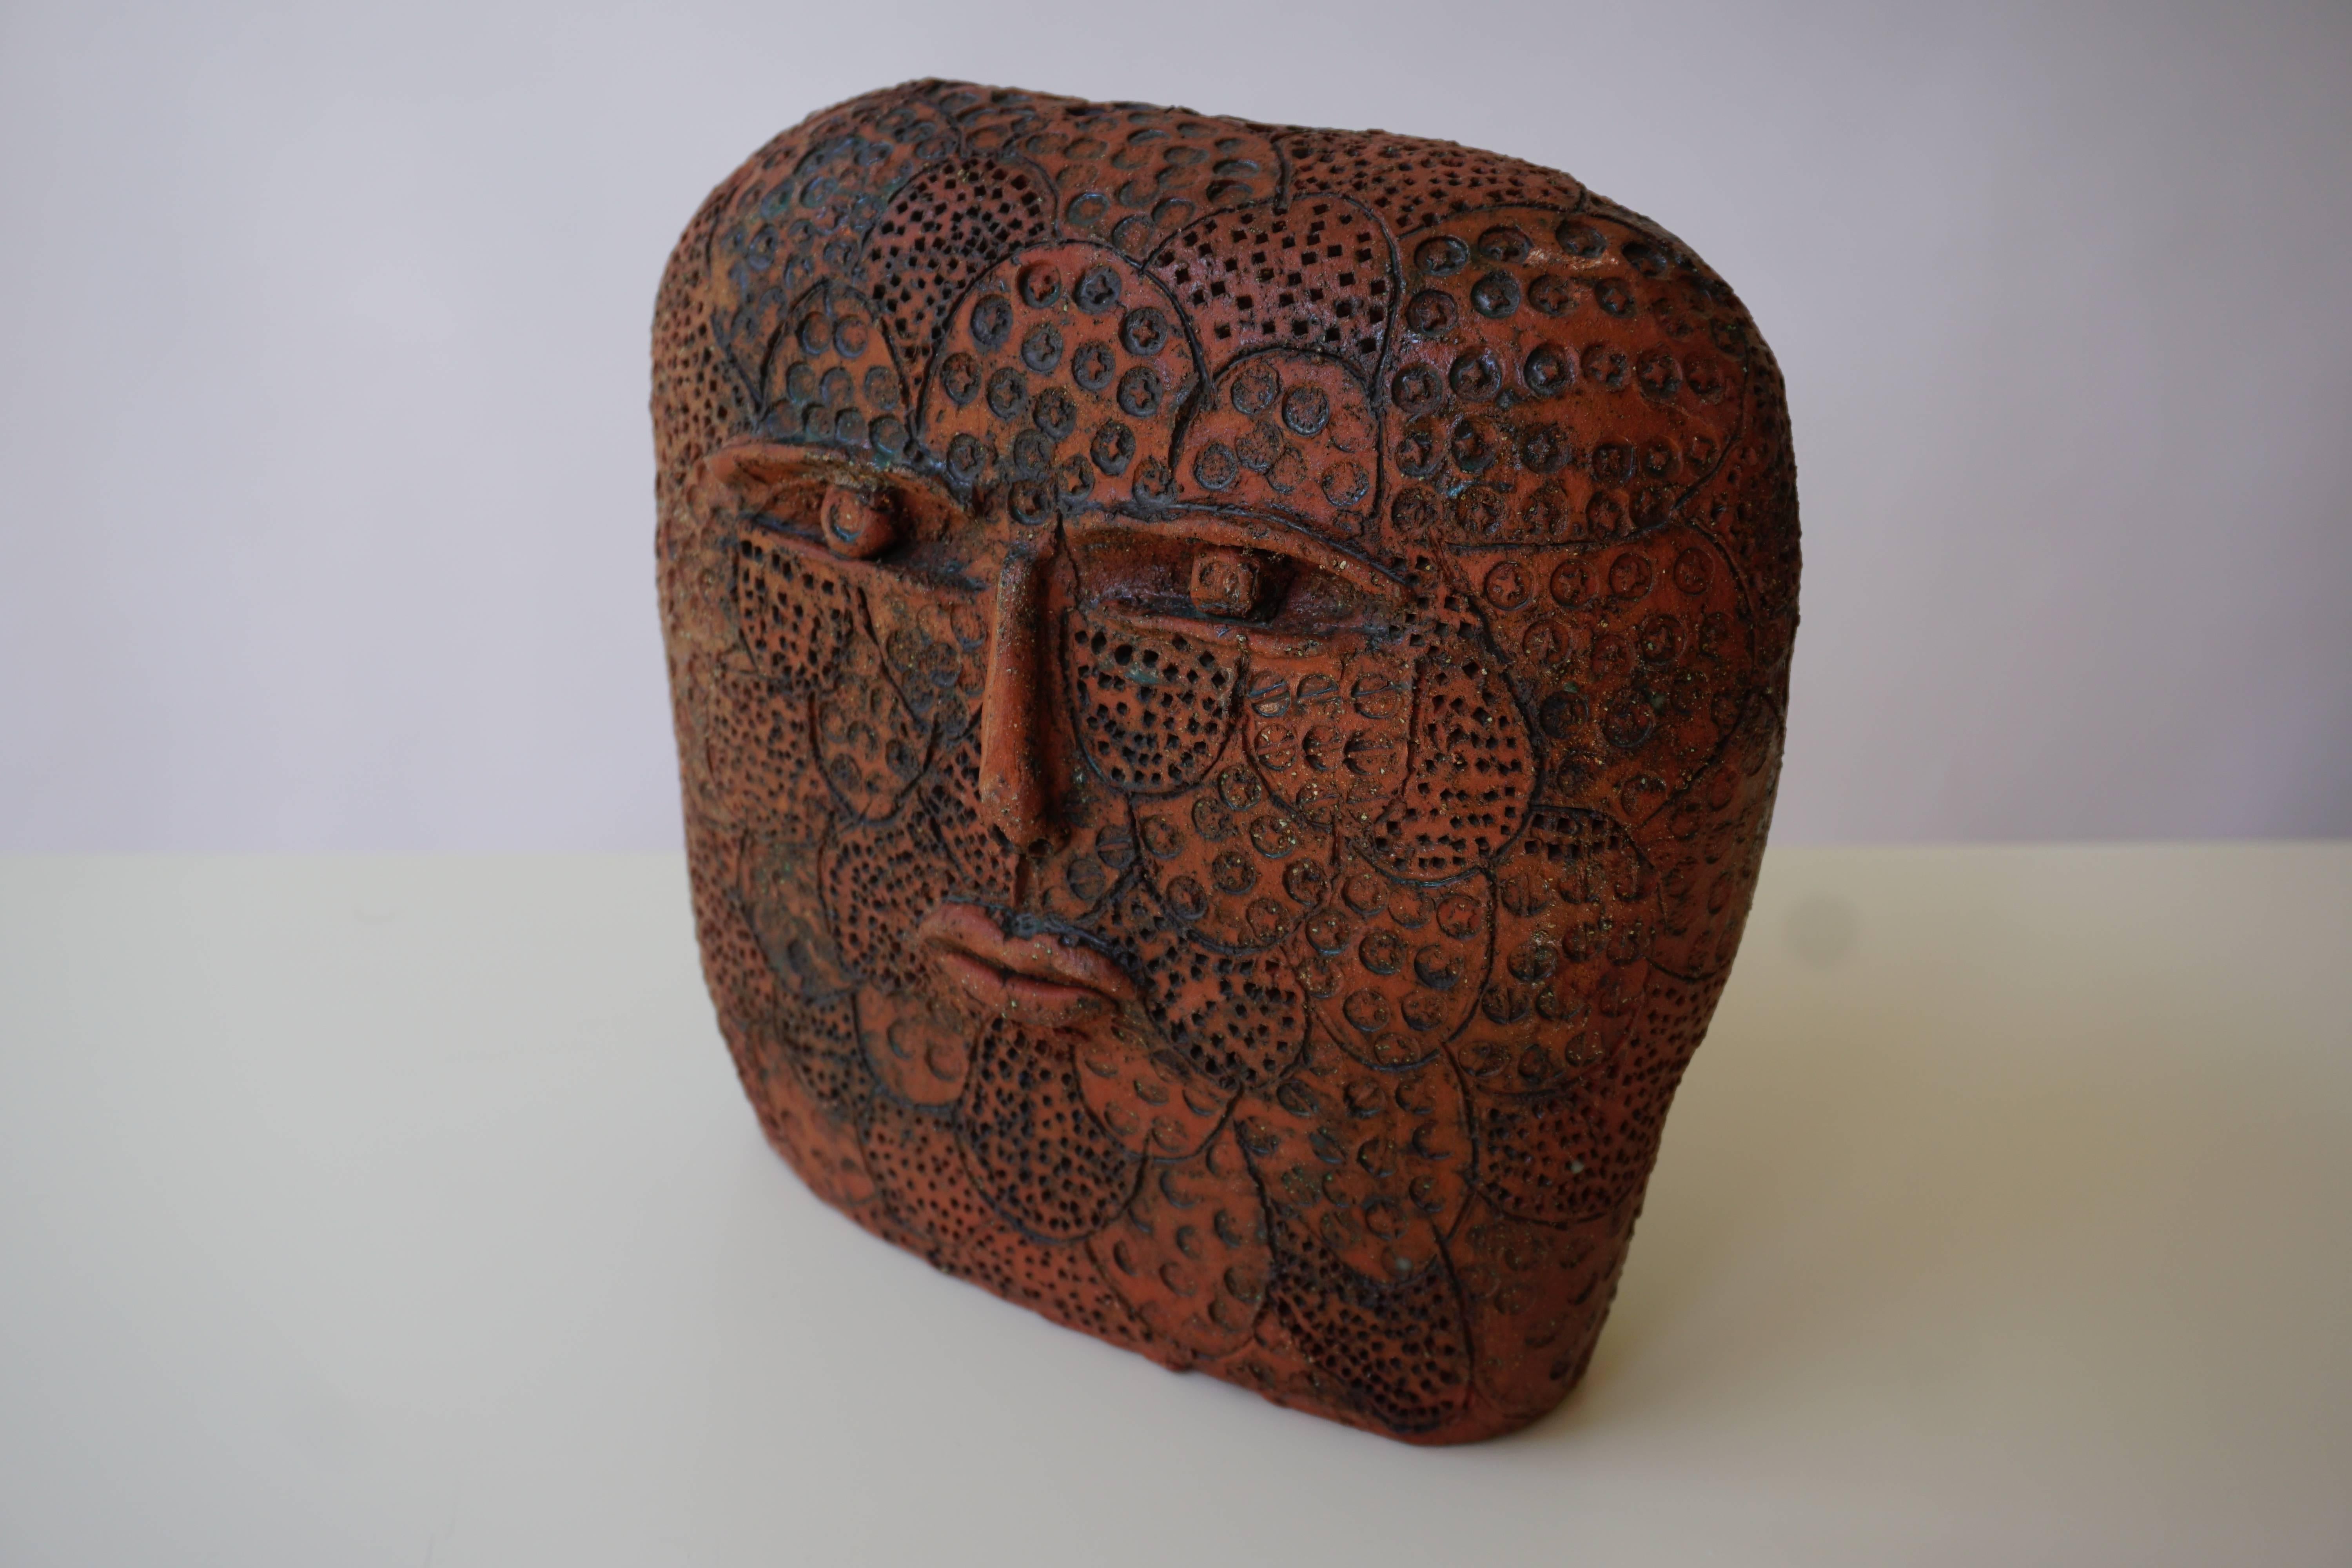 terracotta sculpture for sale